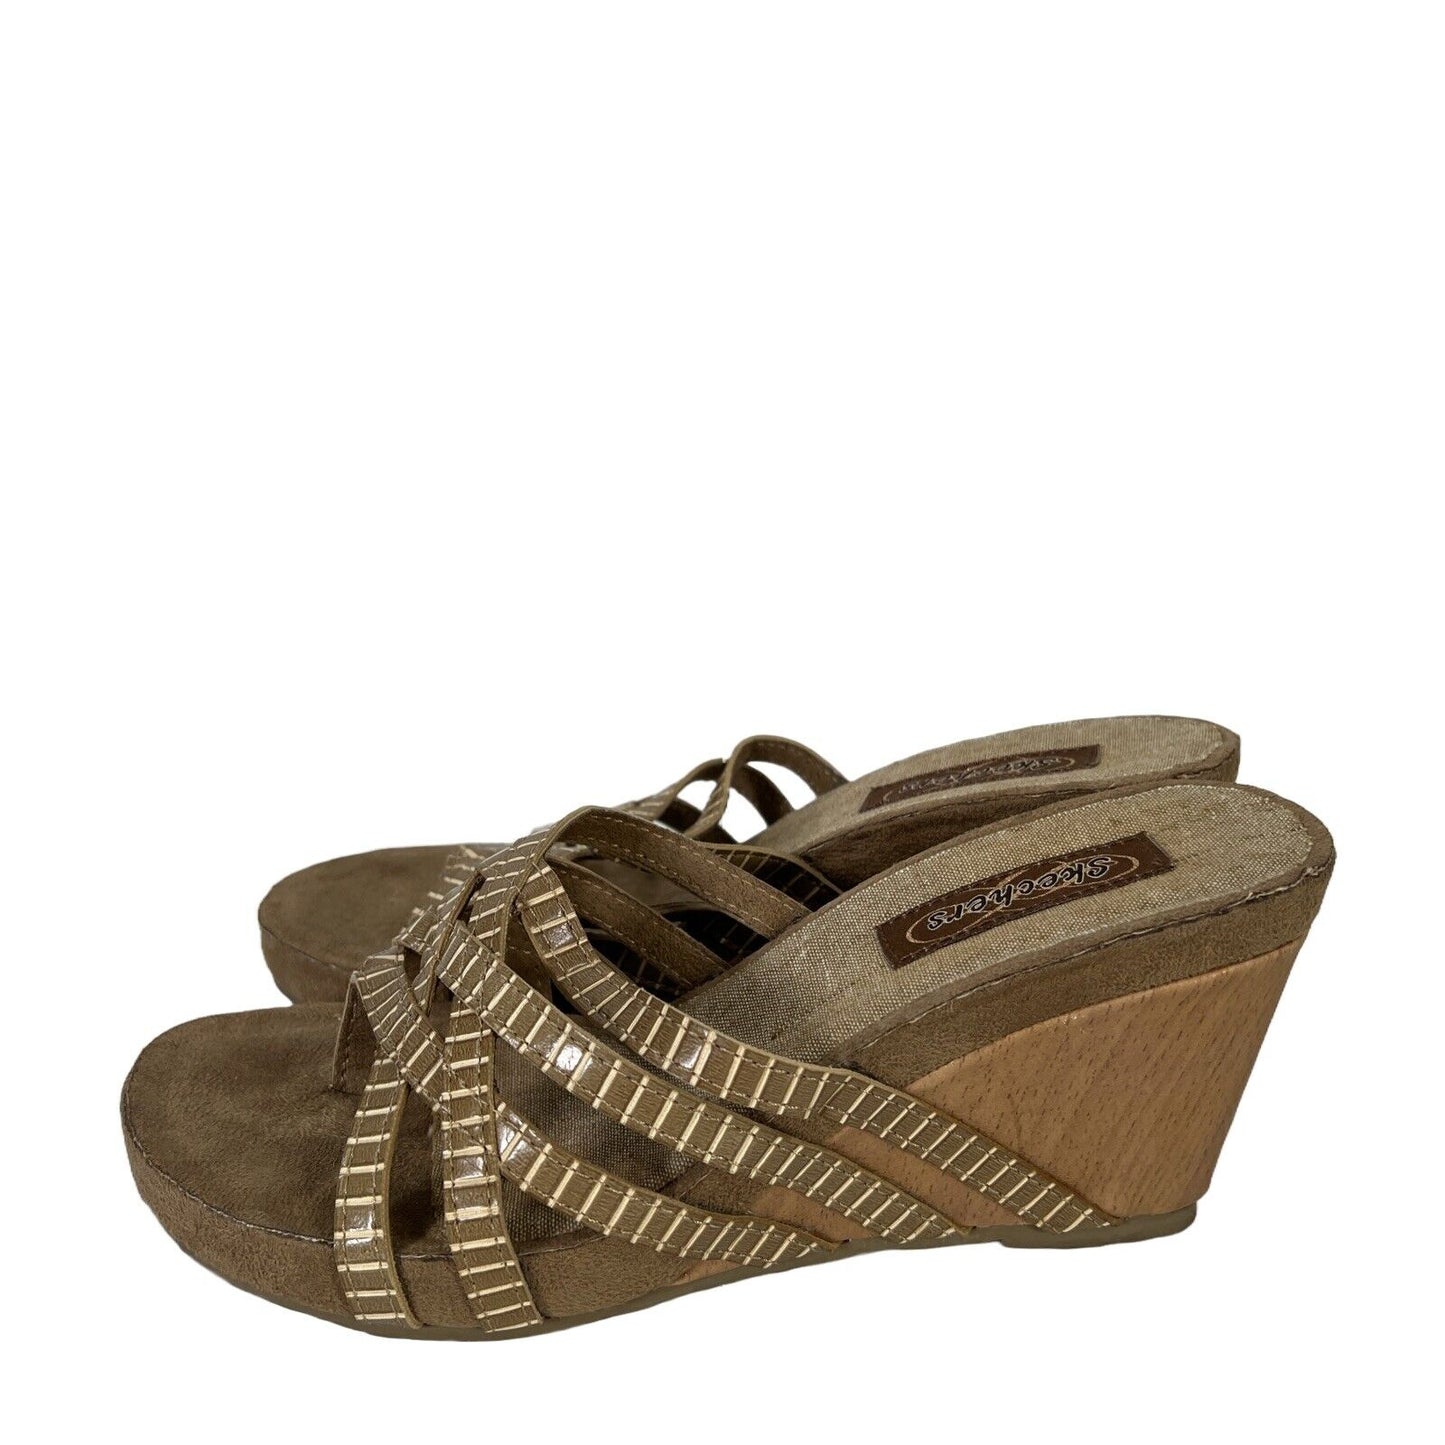 Skechers Women's Tan/Brown Strappy Wedge Sandals - 8